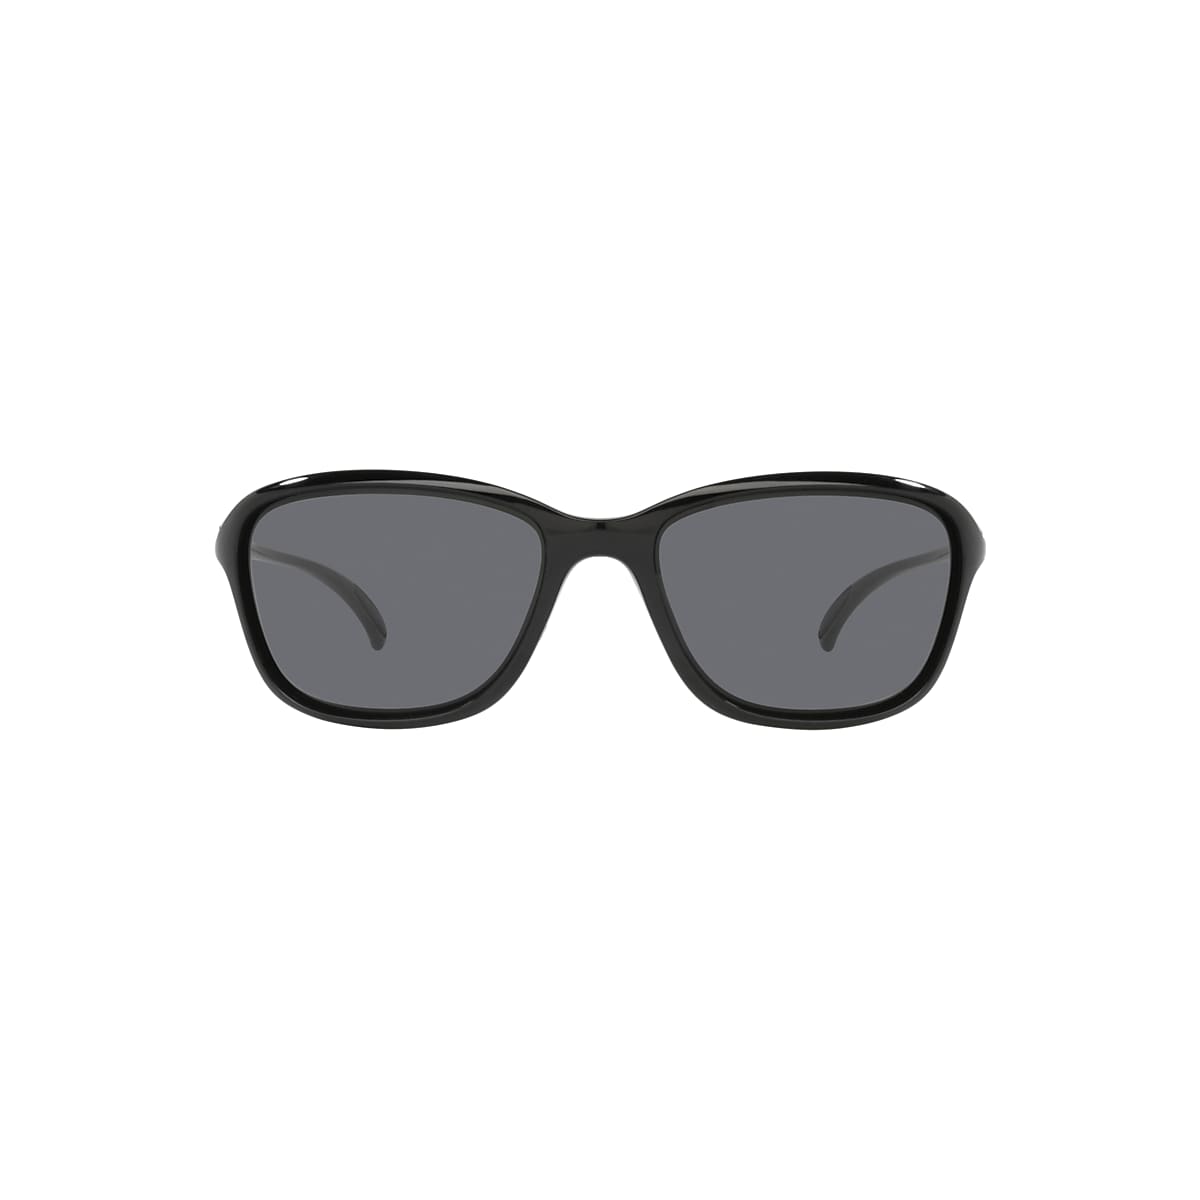 Oakley She’s Unstoppable Sunglasses Black Lens Polarized OO9297-0957  59:17-134